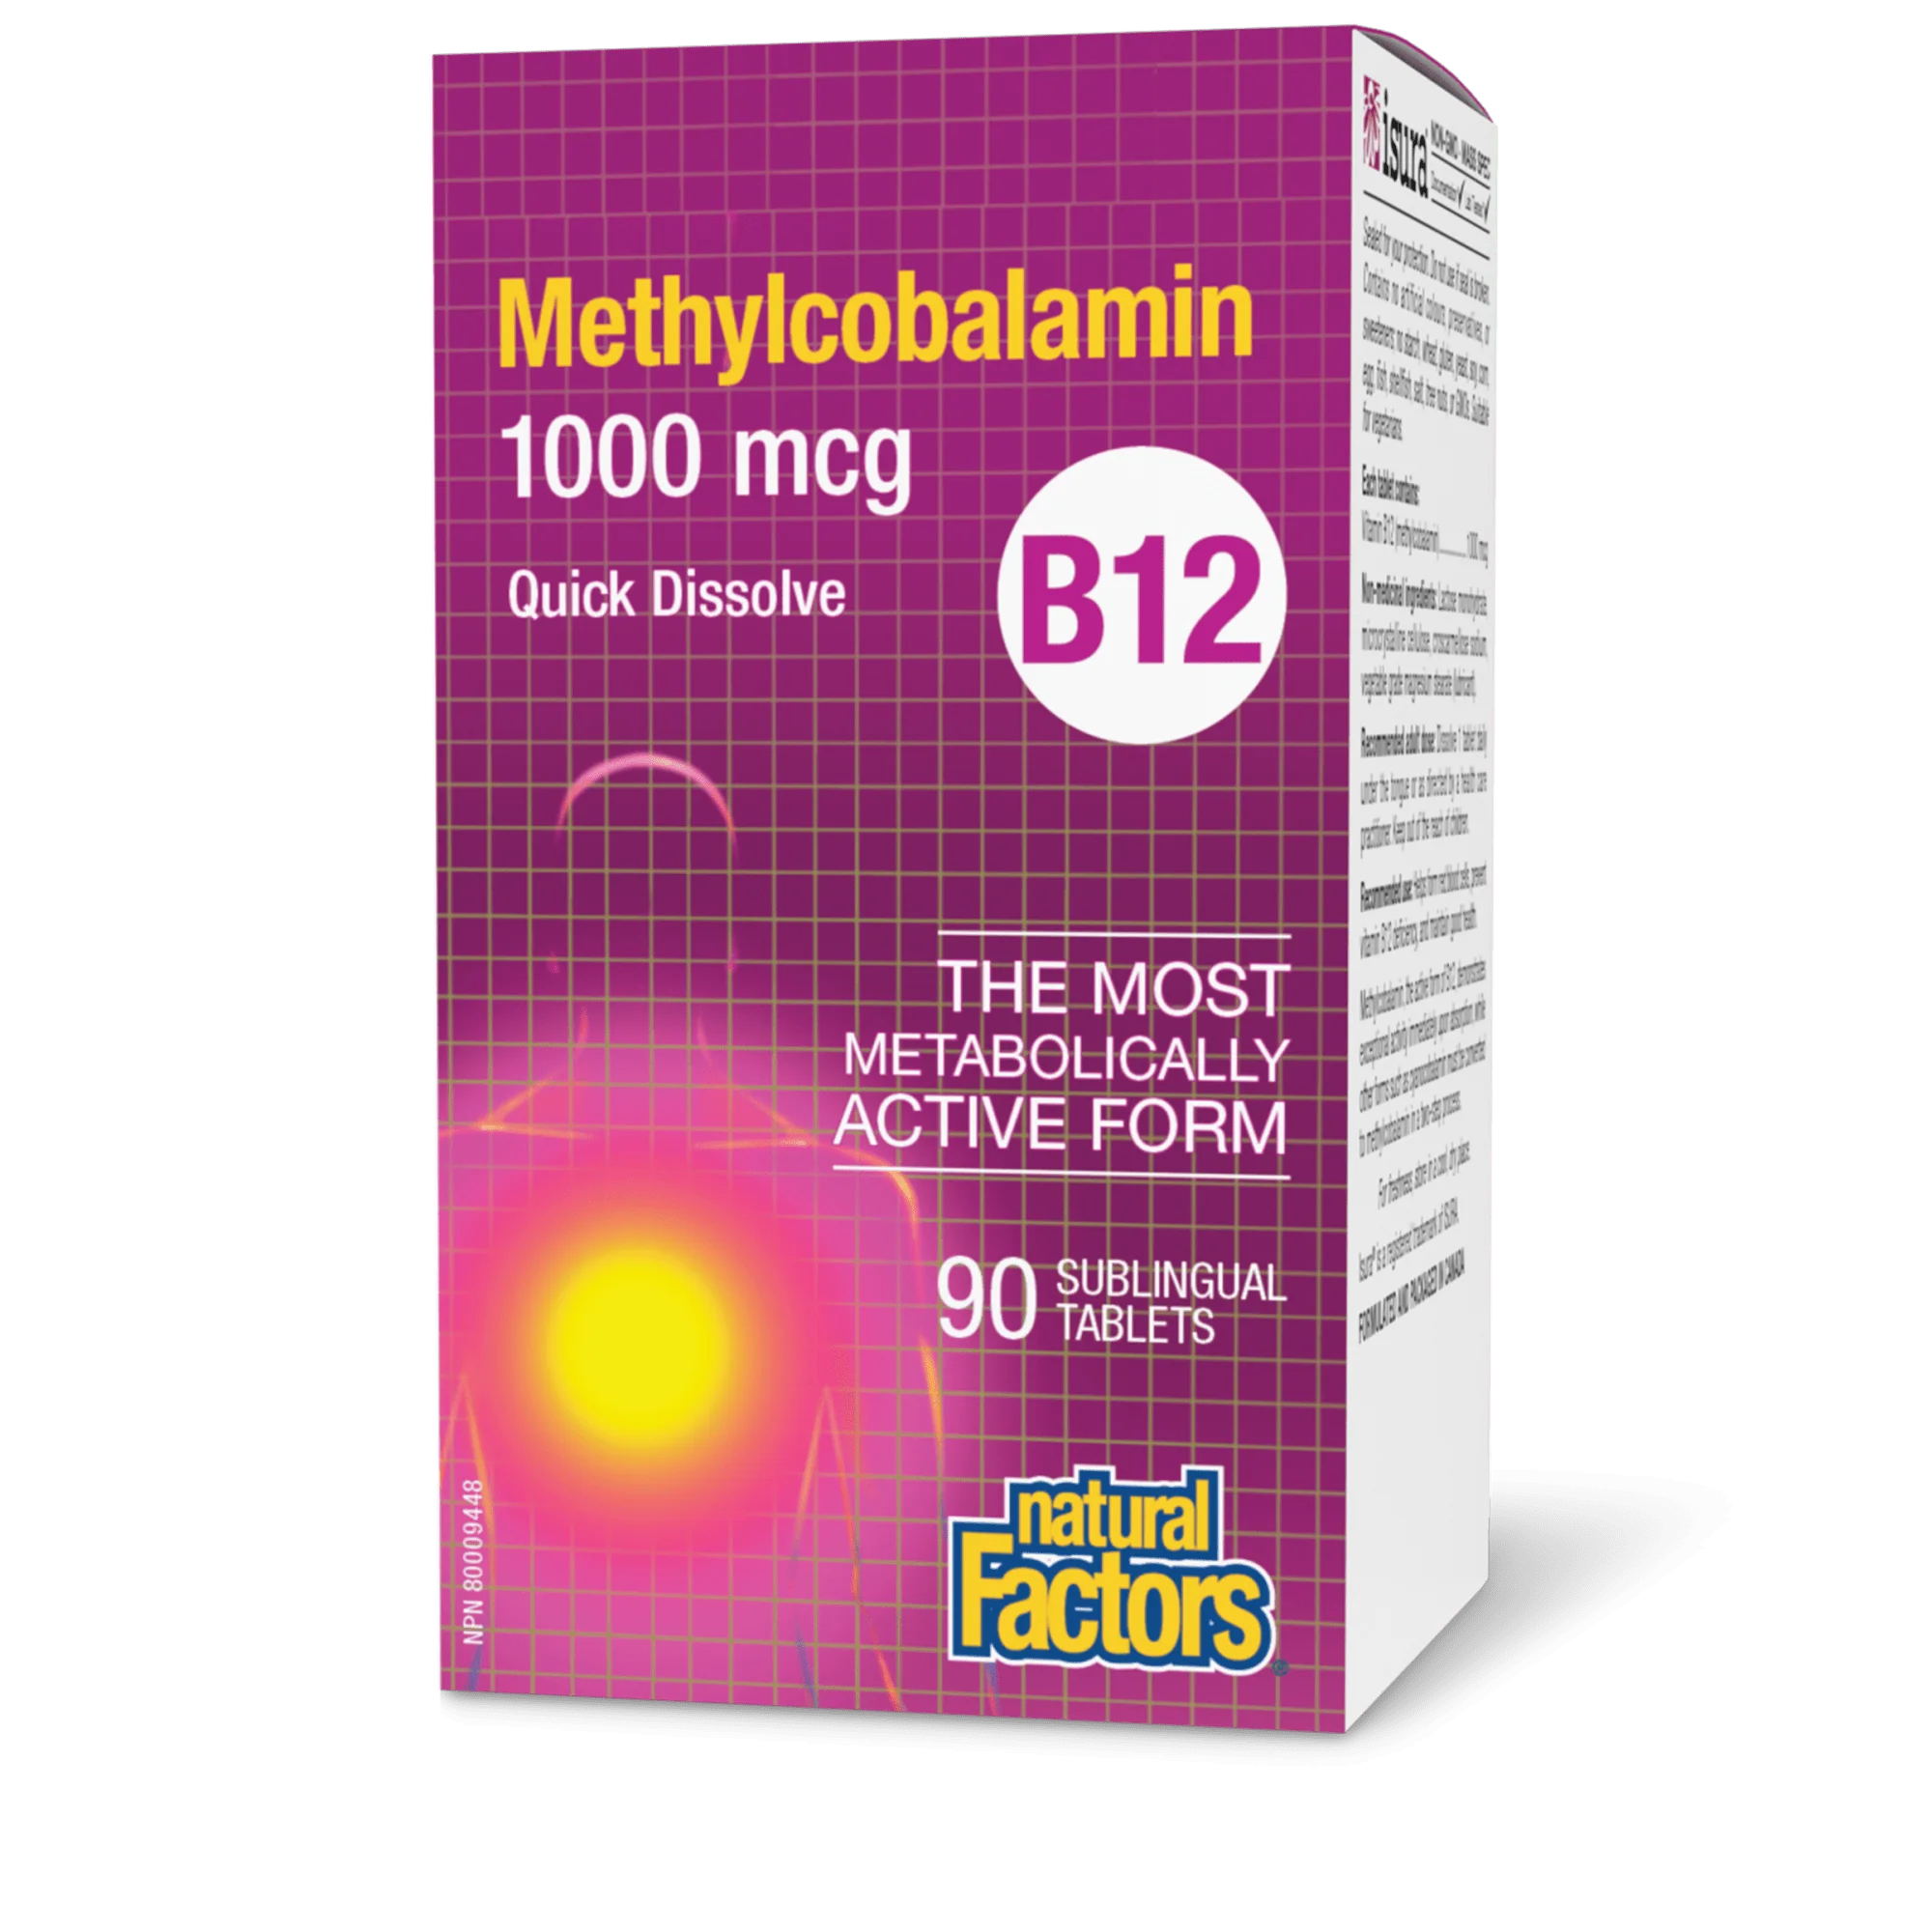 B12 Merhylcobalamin 1000 mcg by Natural Factors, 90 Sublingual Tablets